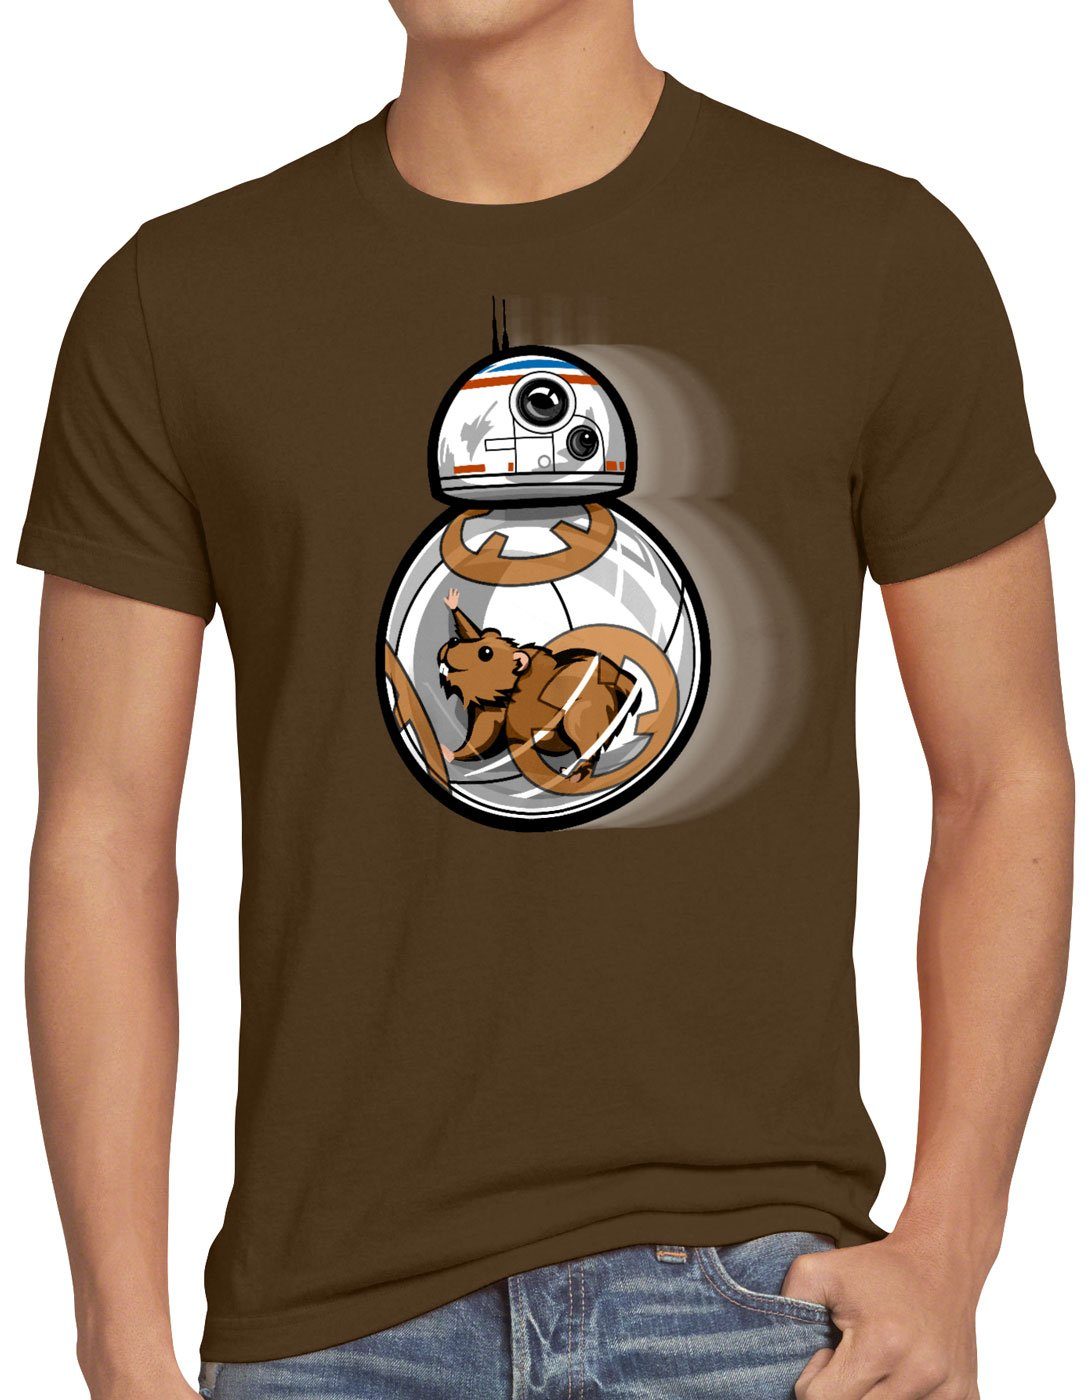 style3 Print-Shirt Herren T-Shirt BB-8 Hamster astro droide roboter r2-d2 braun